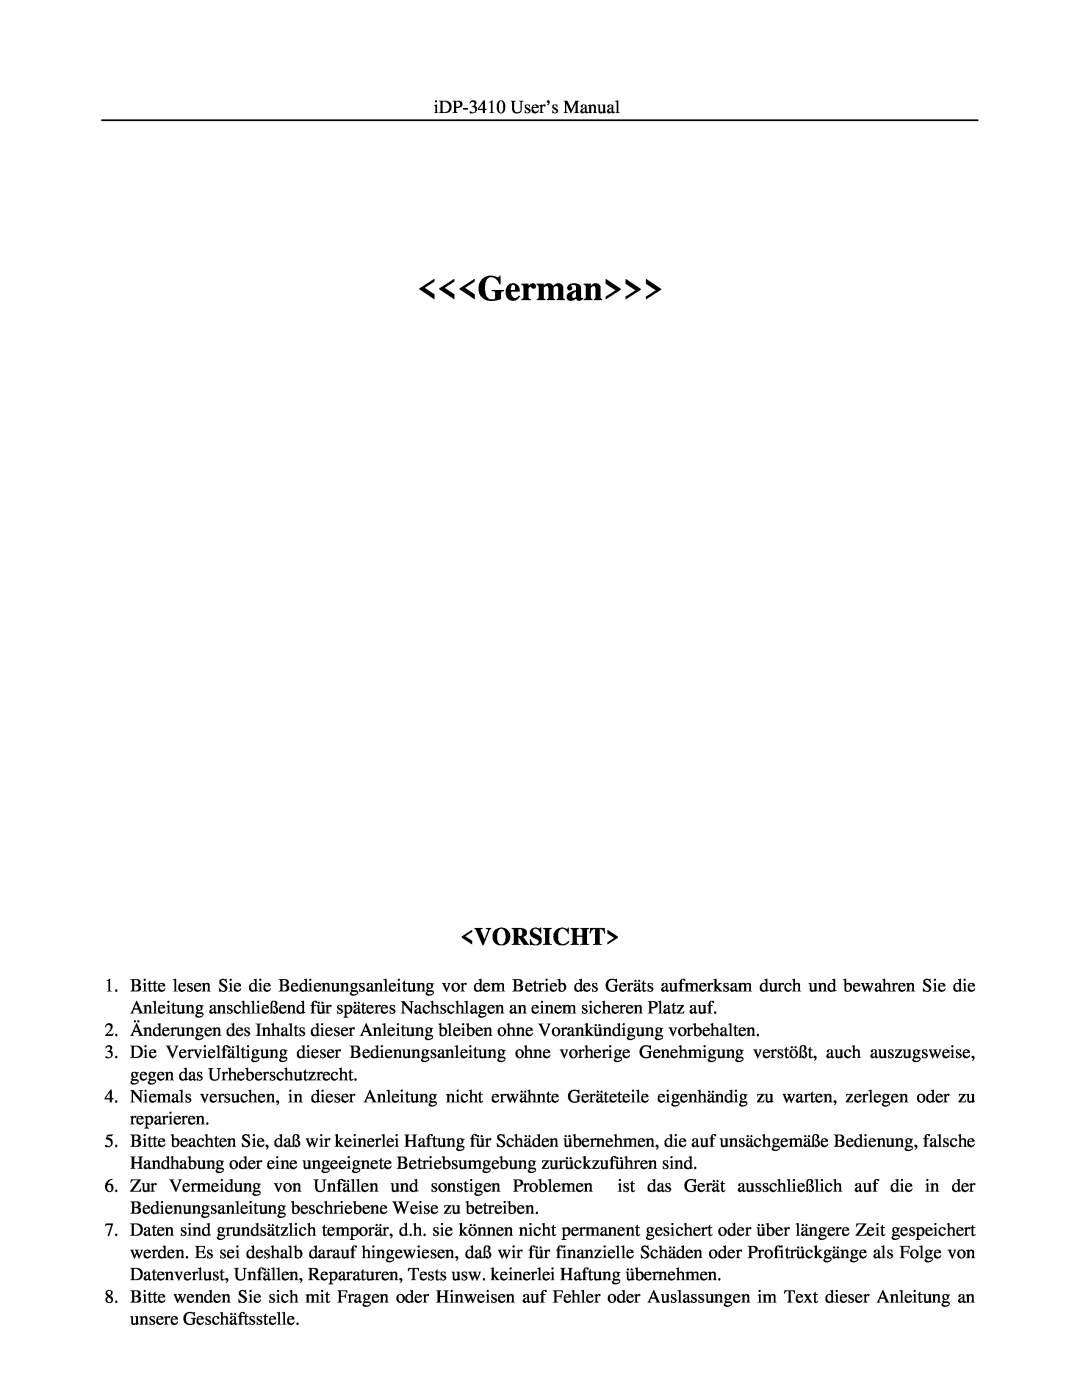 Addlogix iDP-3410 user manual Vorsicht, German 